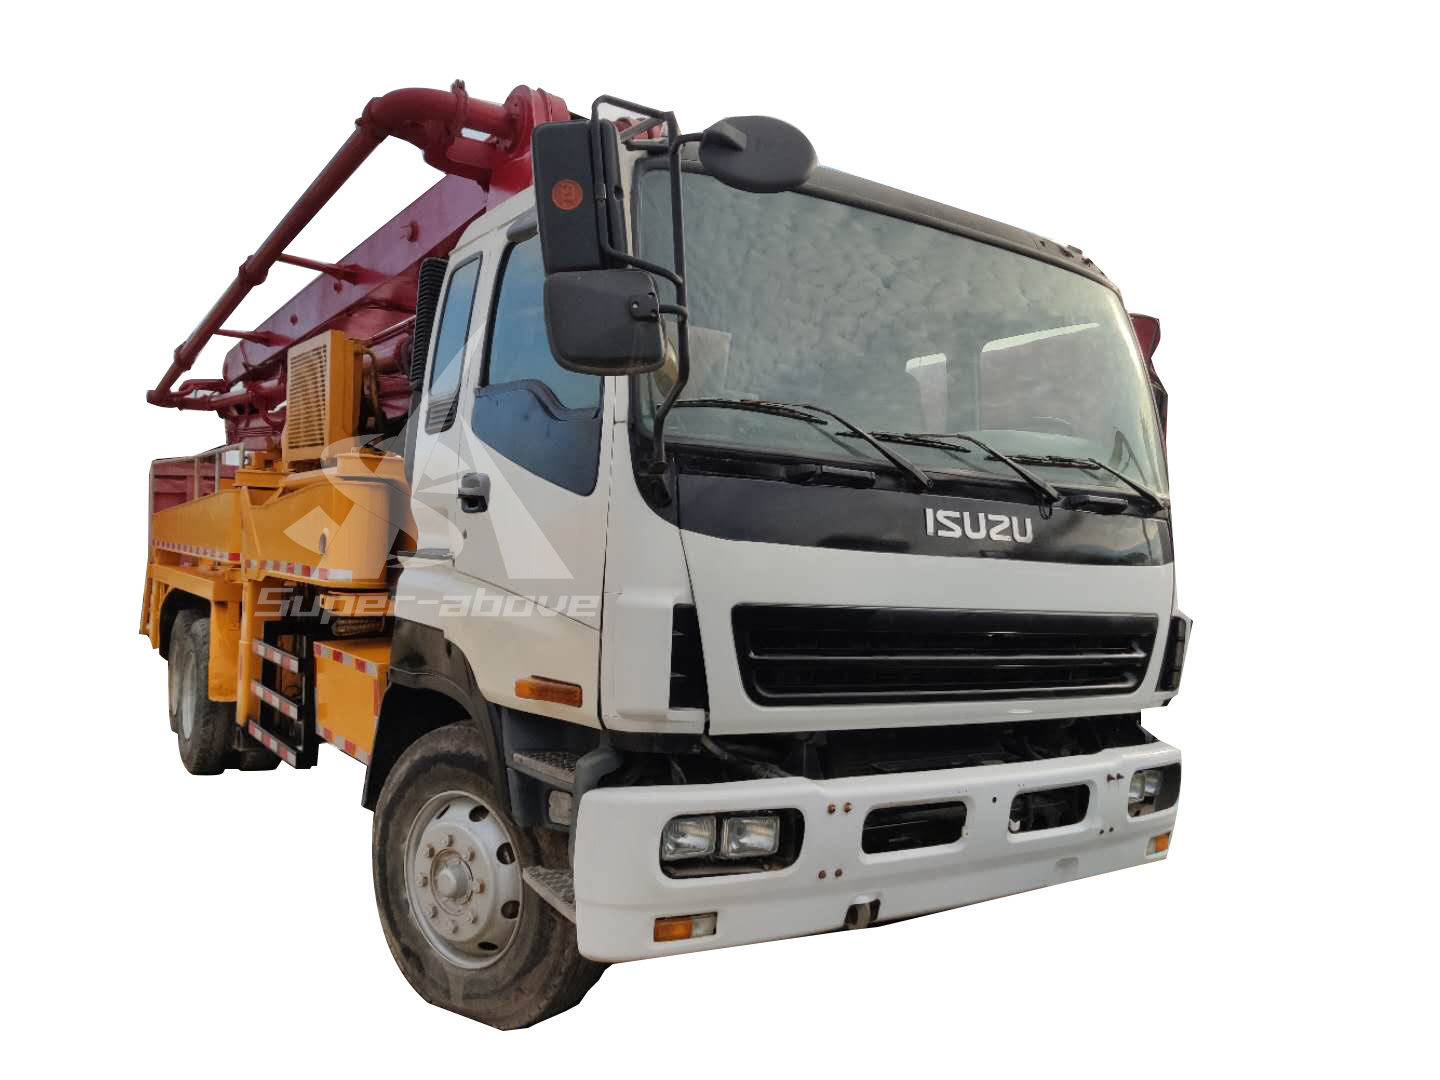 Isuzu Truck Mounted Concrete Pump